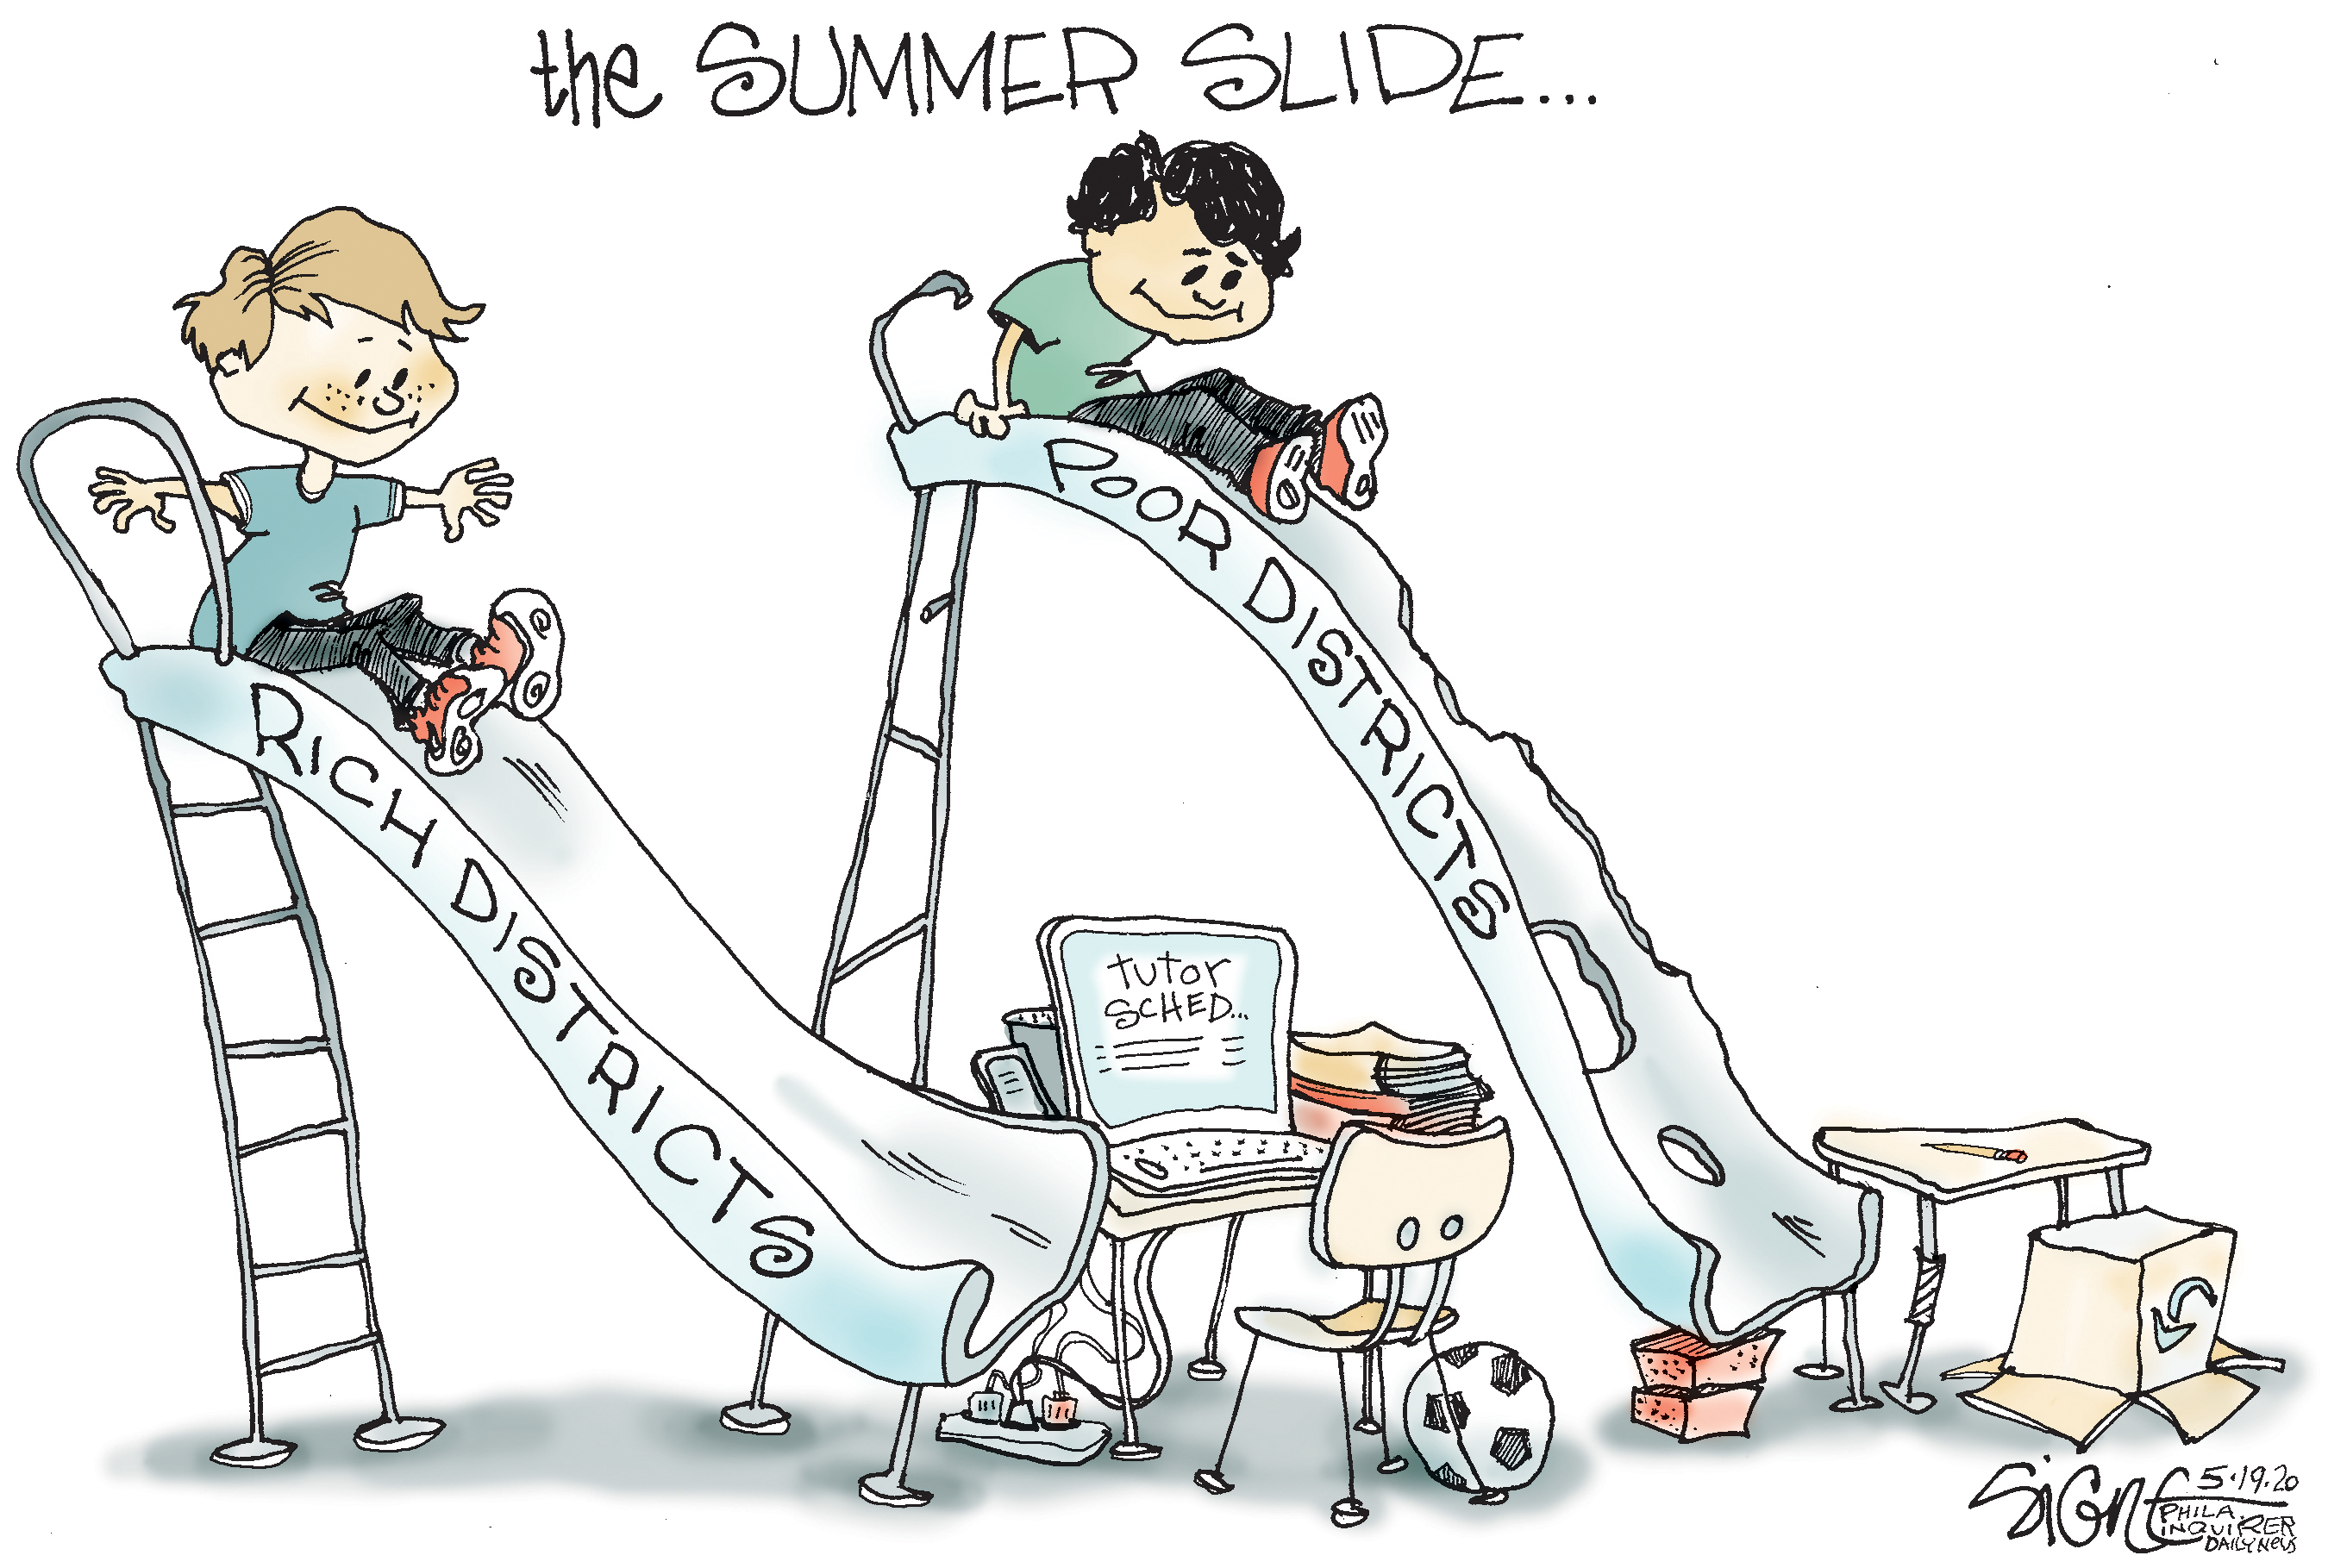 Political Cartoon: 2020's summer slide for school kids